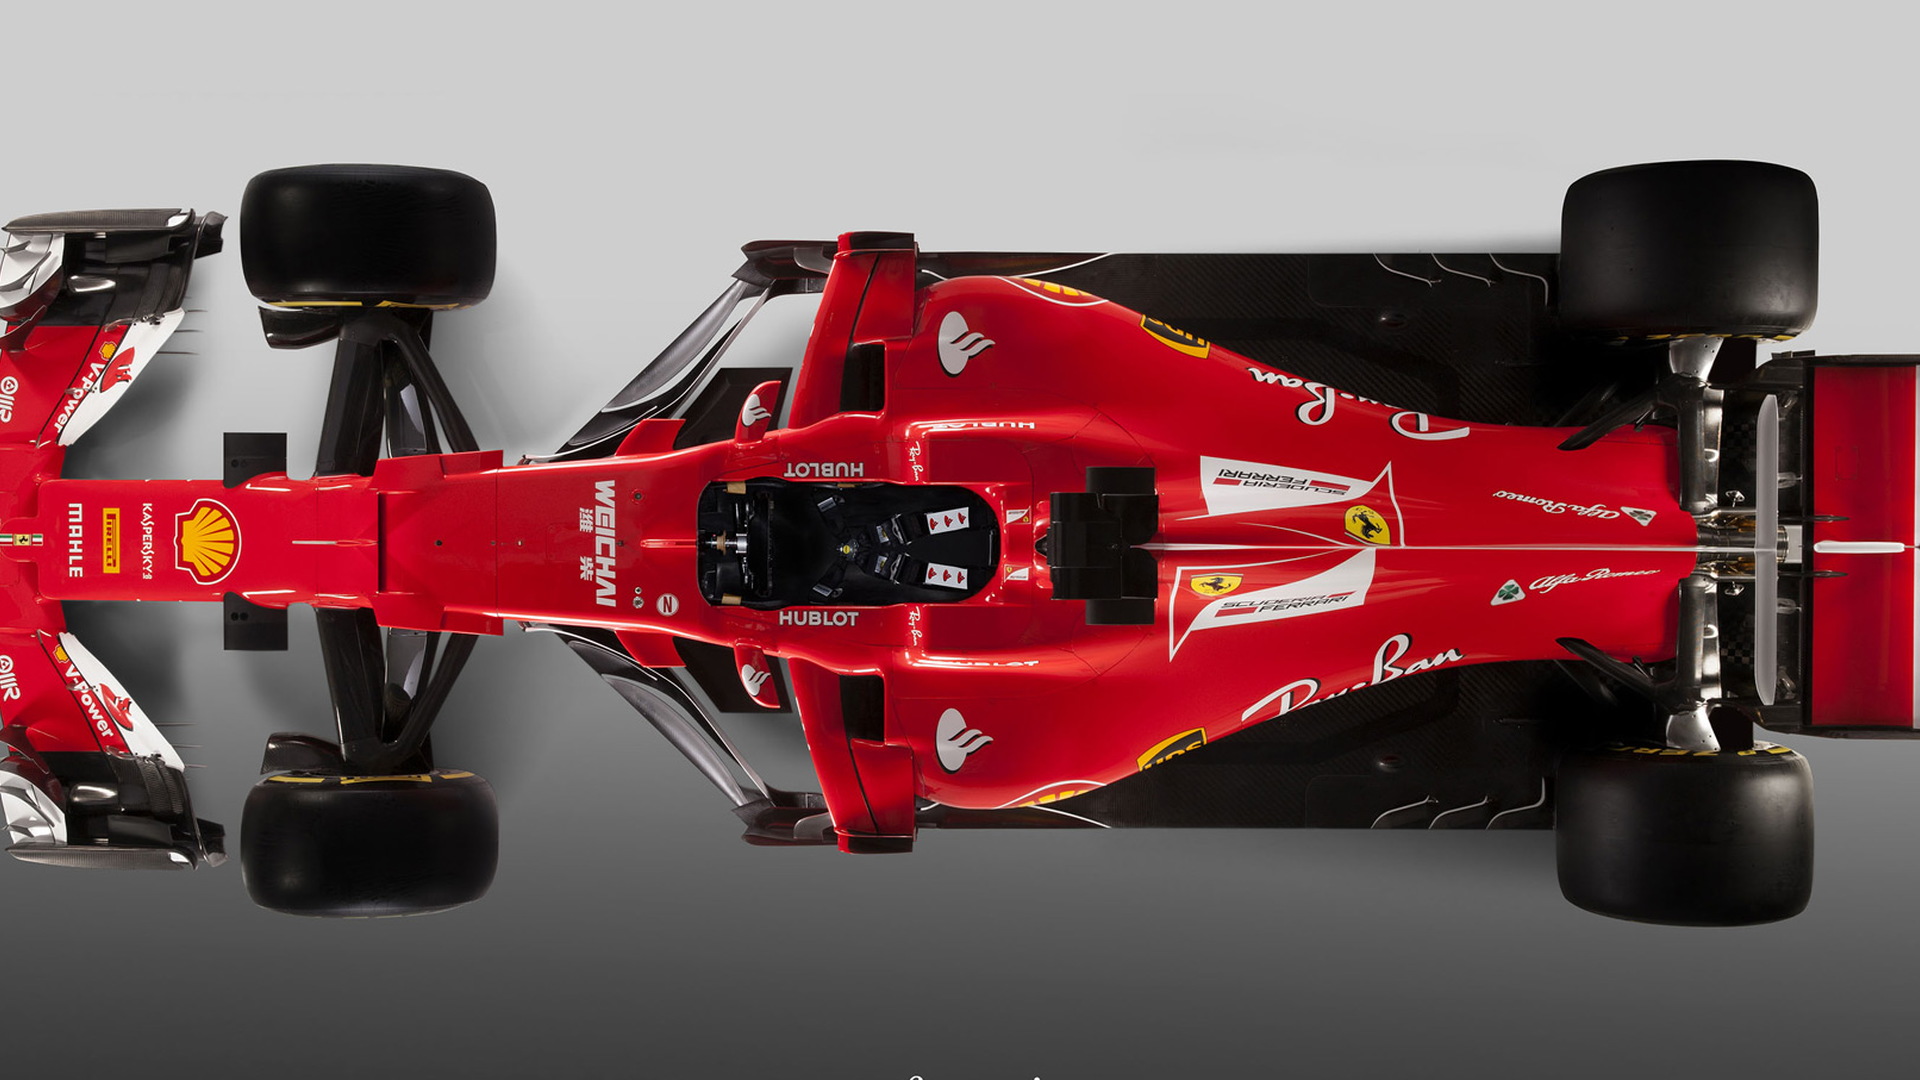 2017 Ferrari SF70H Formula One race car